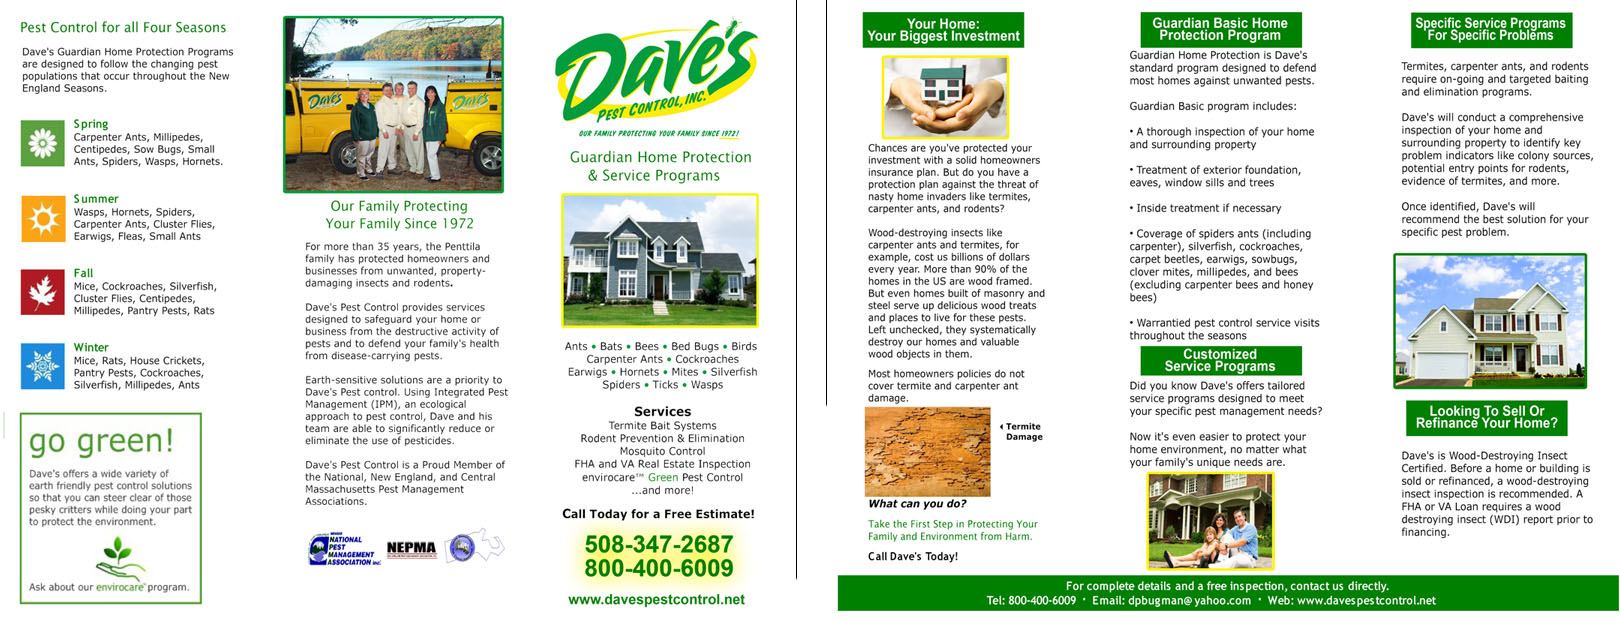 Daves Brochure Design Cover